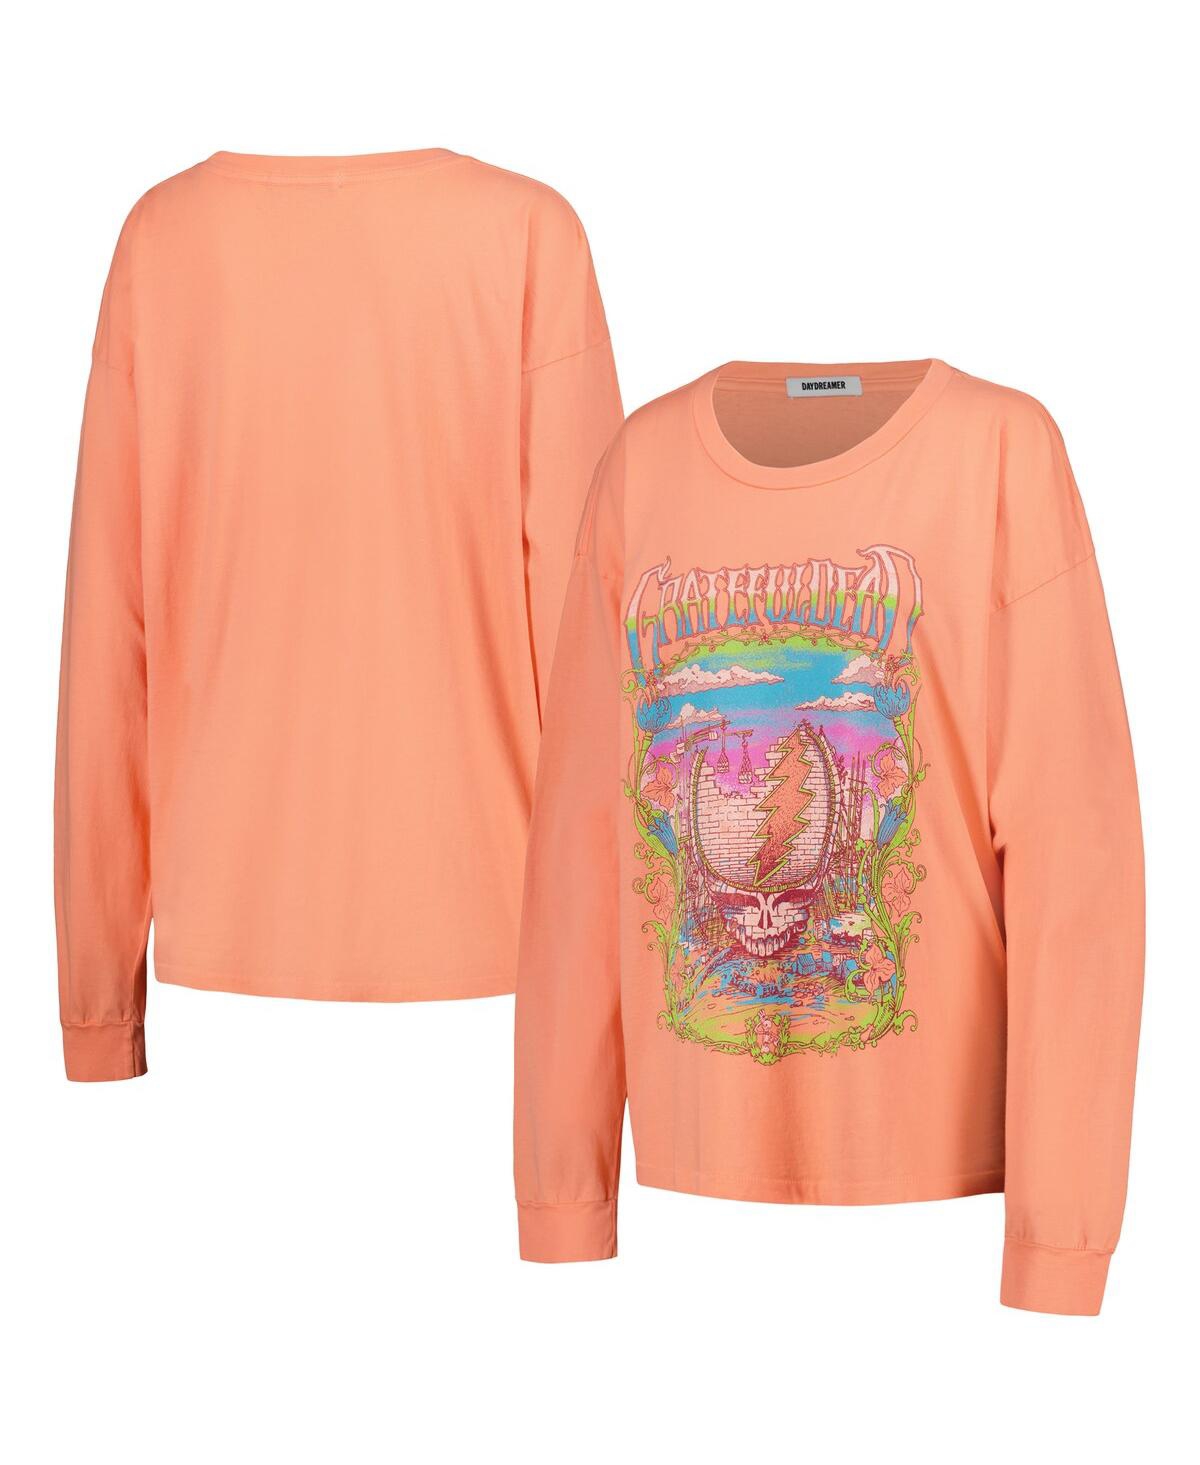 Women's Daydreamer Coral The Grateful Dead Merch Long Sleeve T-shirt - Coral